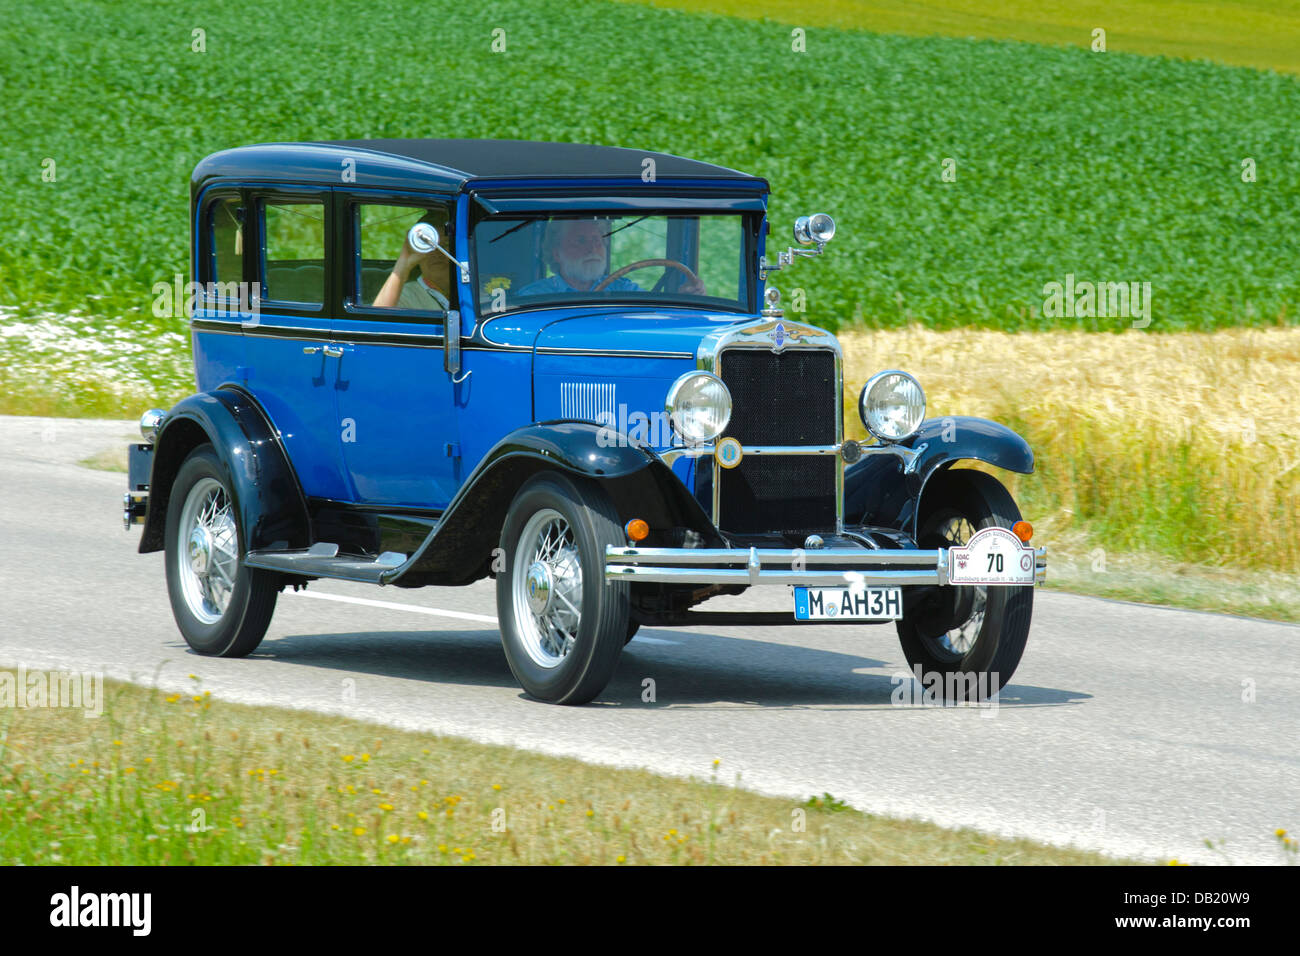 Chevrolet Sedan AD Universal, built at year 1930, photo taken on July 13, 2013 in Landsberg, Germany Stock Photo